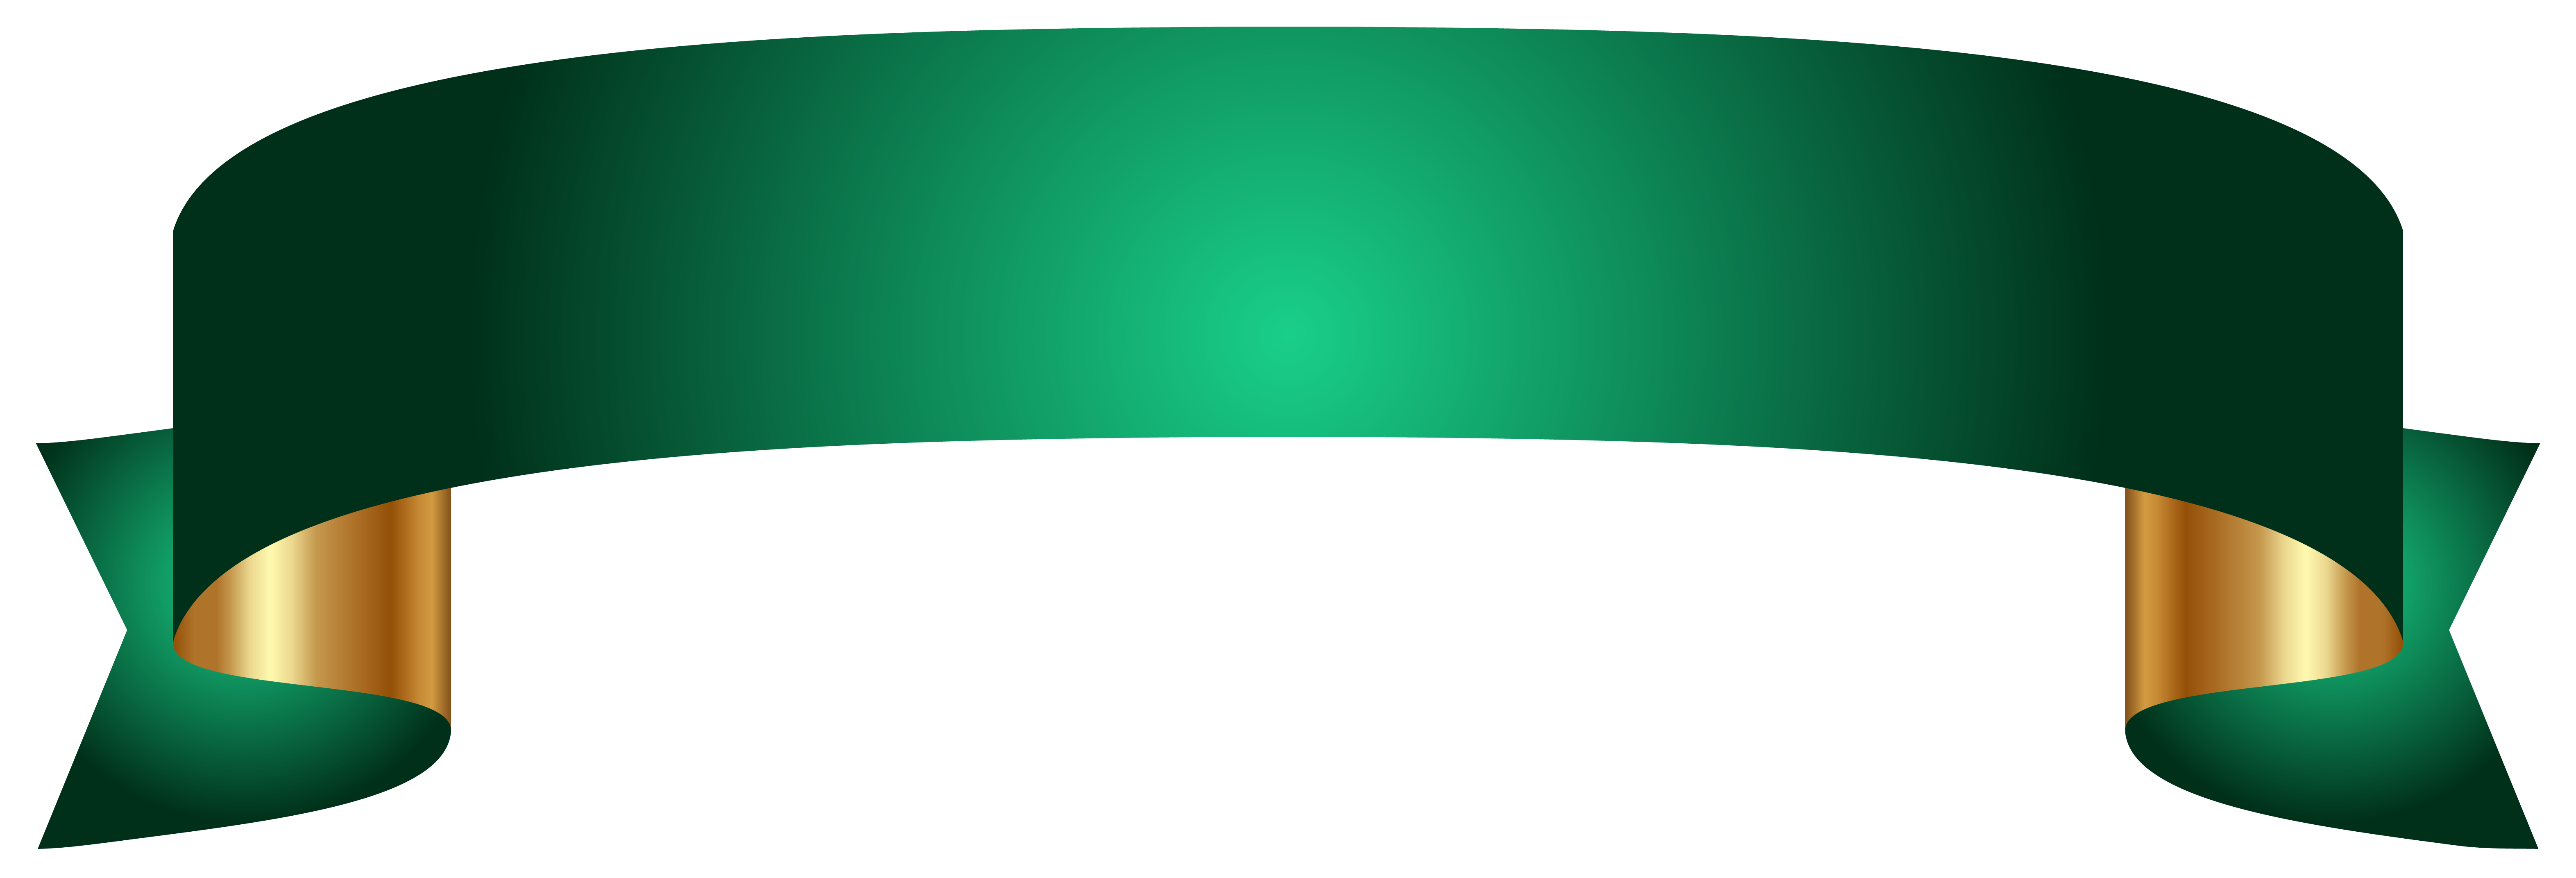 Green banner transparent.